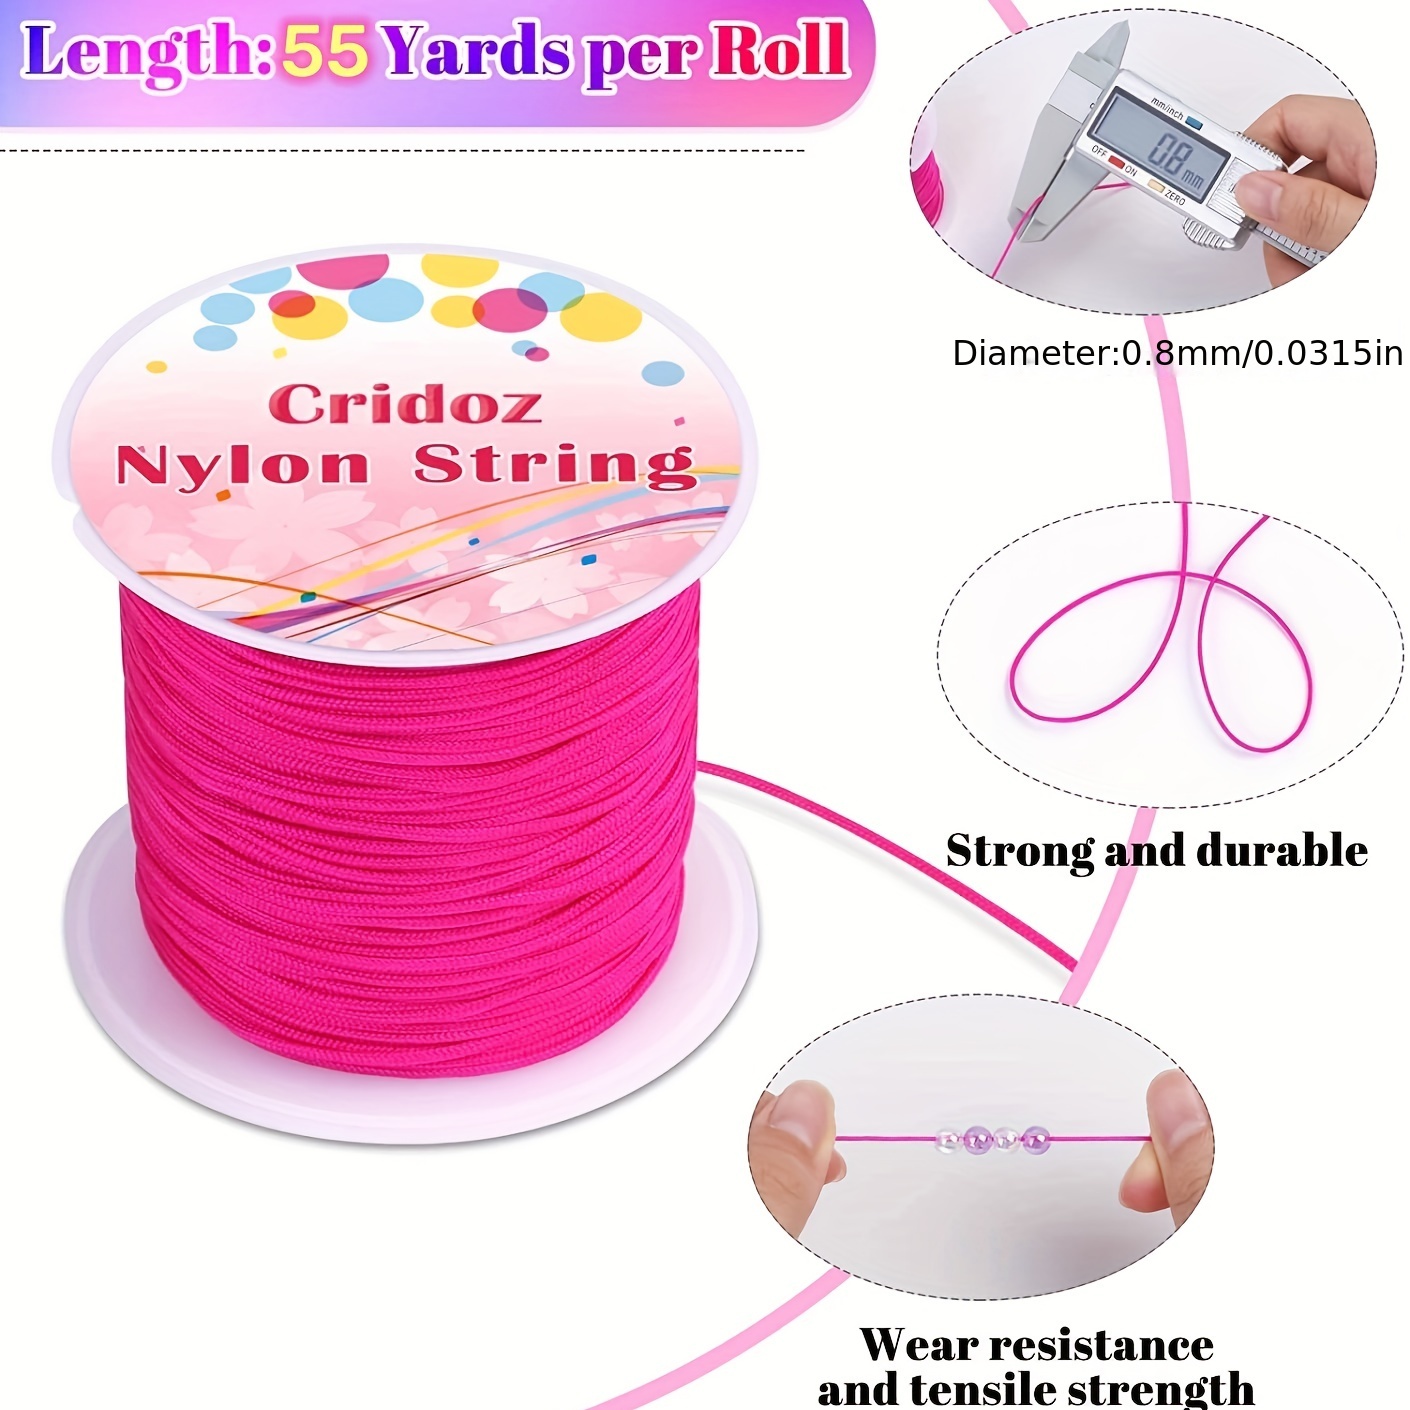 1 Roll Nylon Beading Thread Knotting Cord 0.6mm 50 Yards Braided Nylon  Crafting Satin String, Bright Orange 